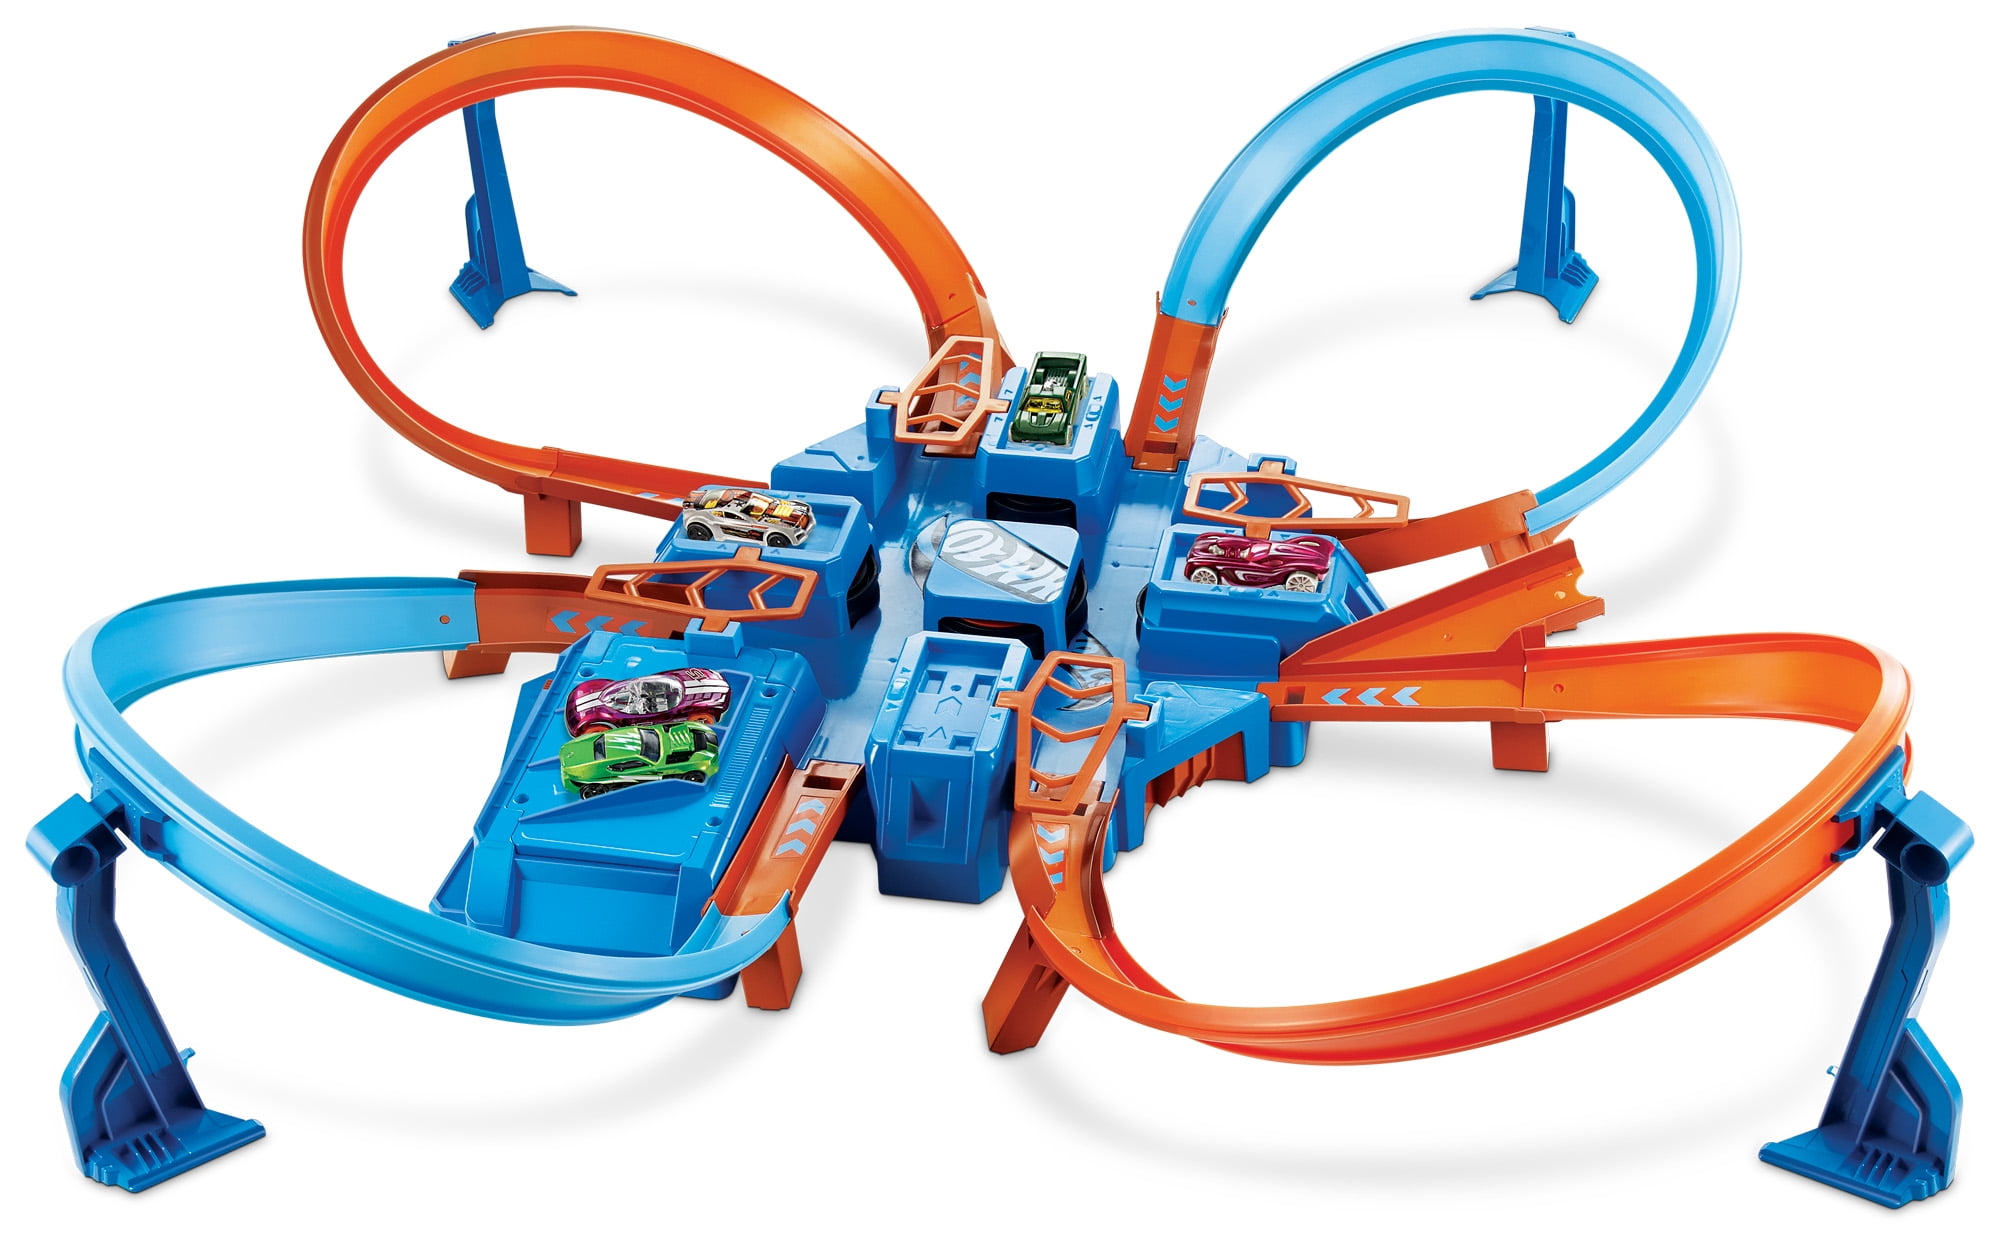 Hot Wheels Criss Cross Crash Track Set Motorized 4 Zones Toys For Boys